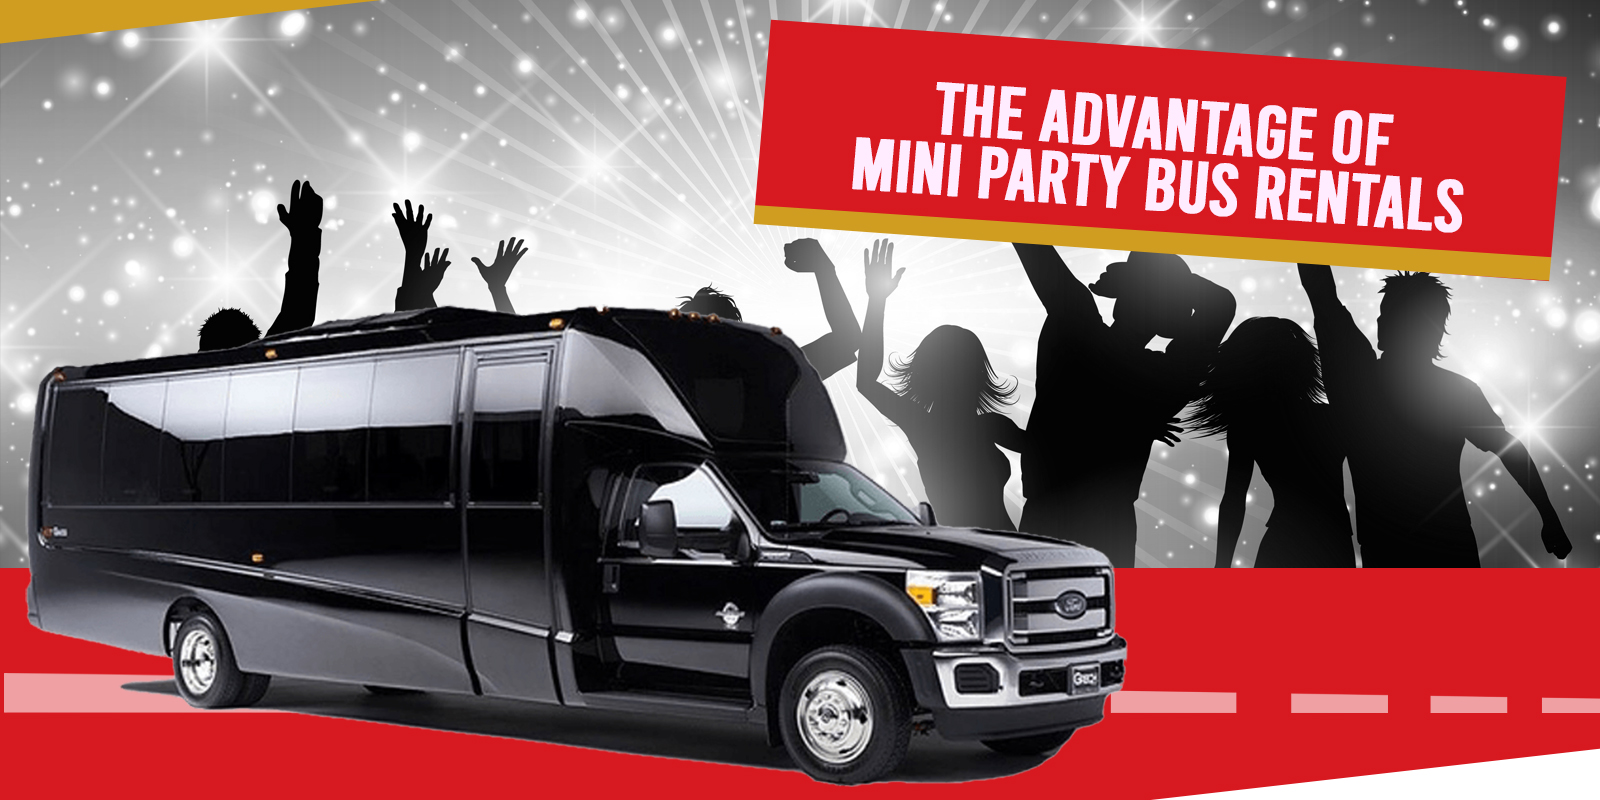 The Advantage of Mini Party Bus Rentals